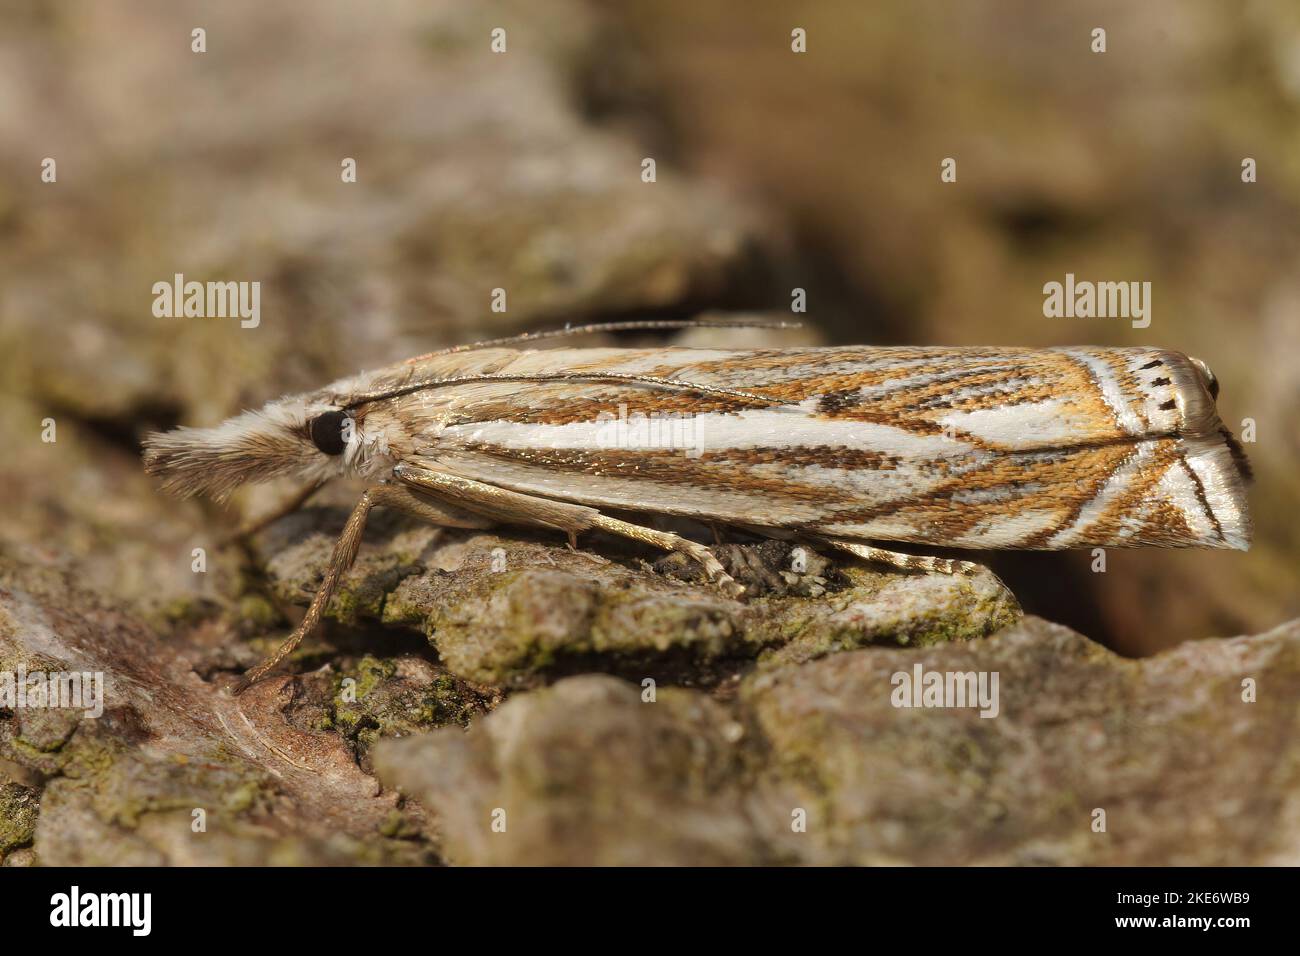 A macro shot of a Crambus lathoniellus moth on wooden surface Stock Photo